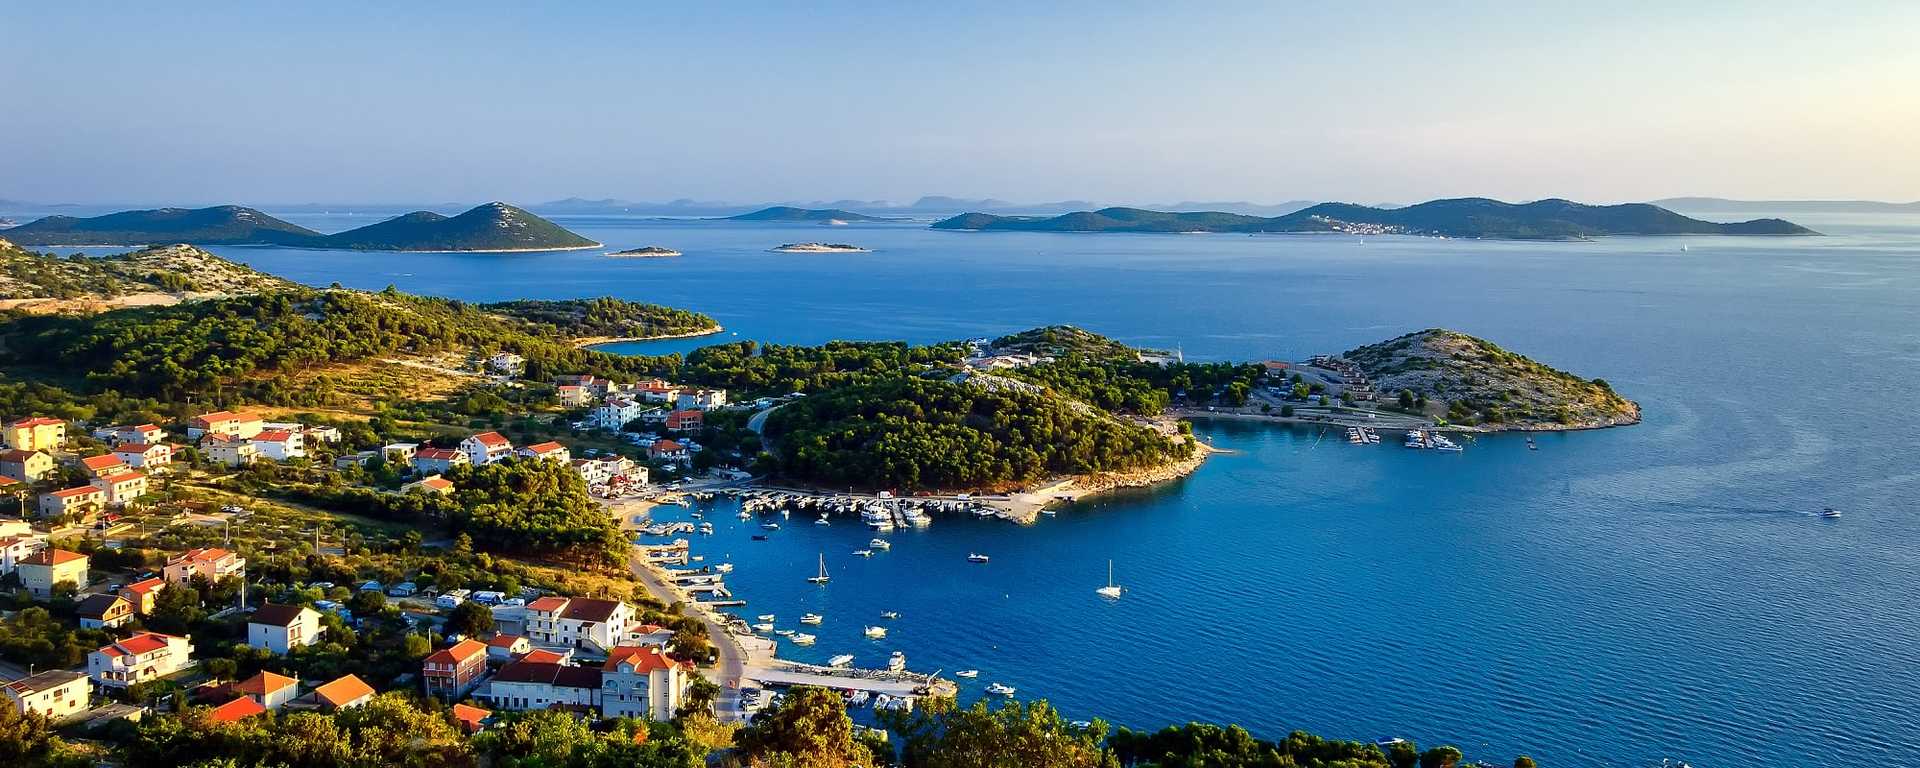 Kornati archipelago in northern Dalmatia, Croatia